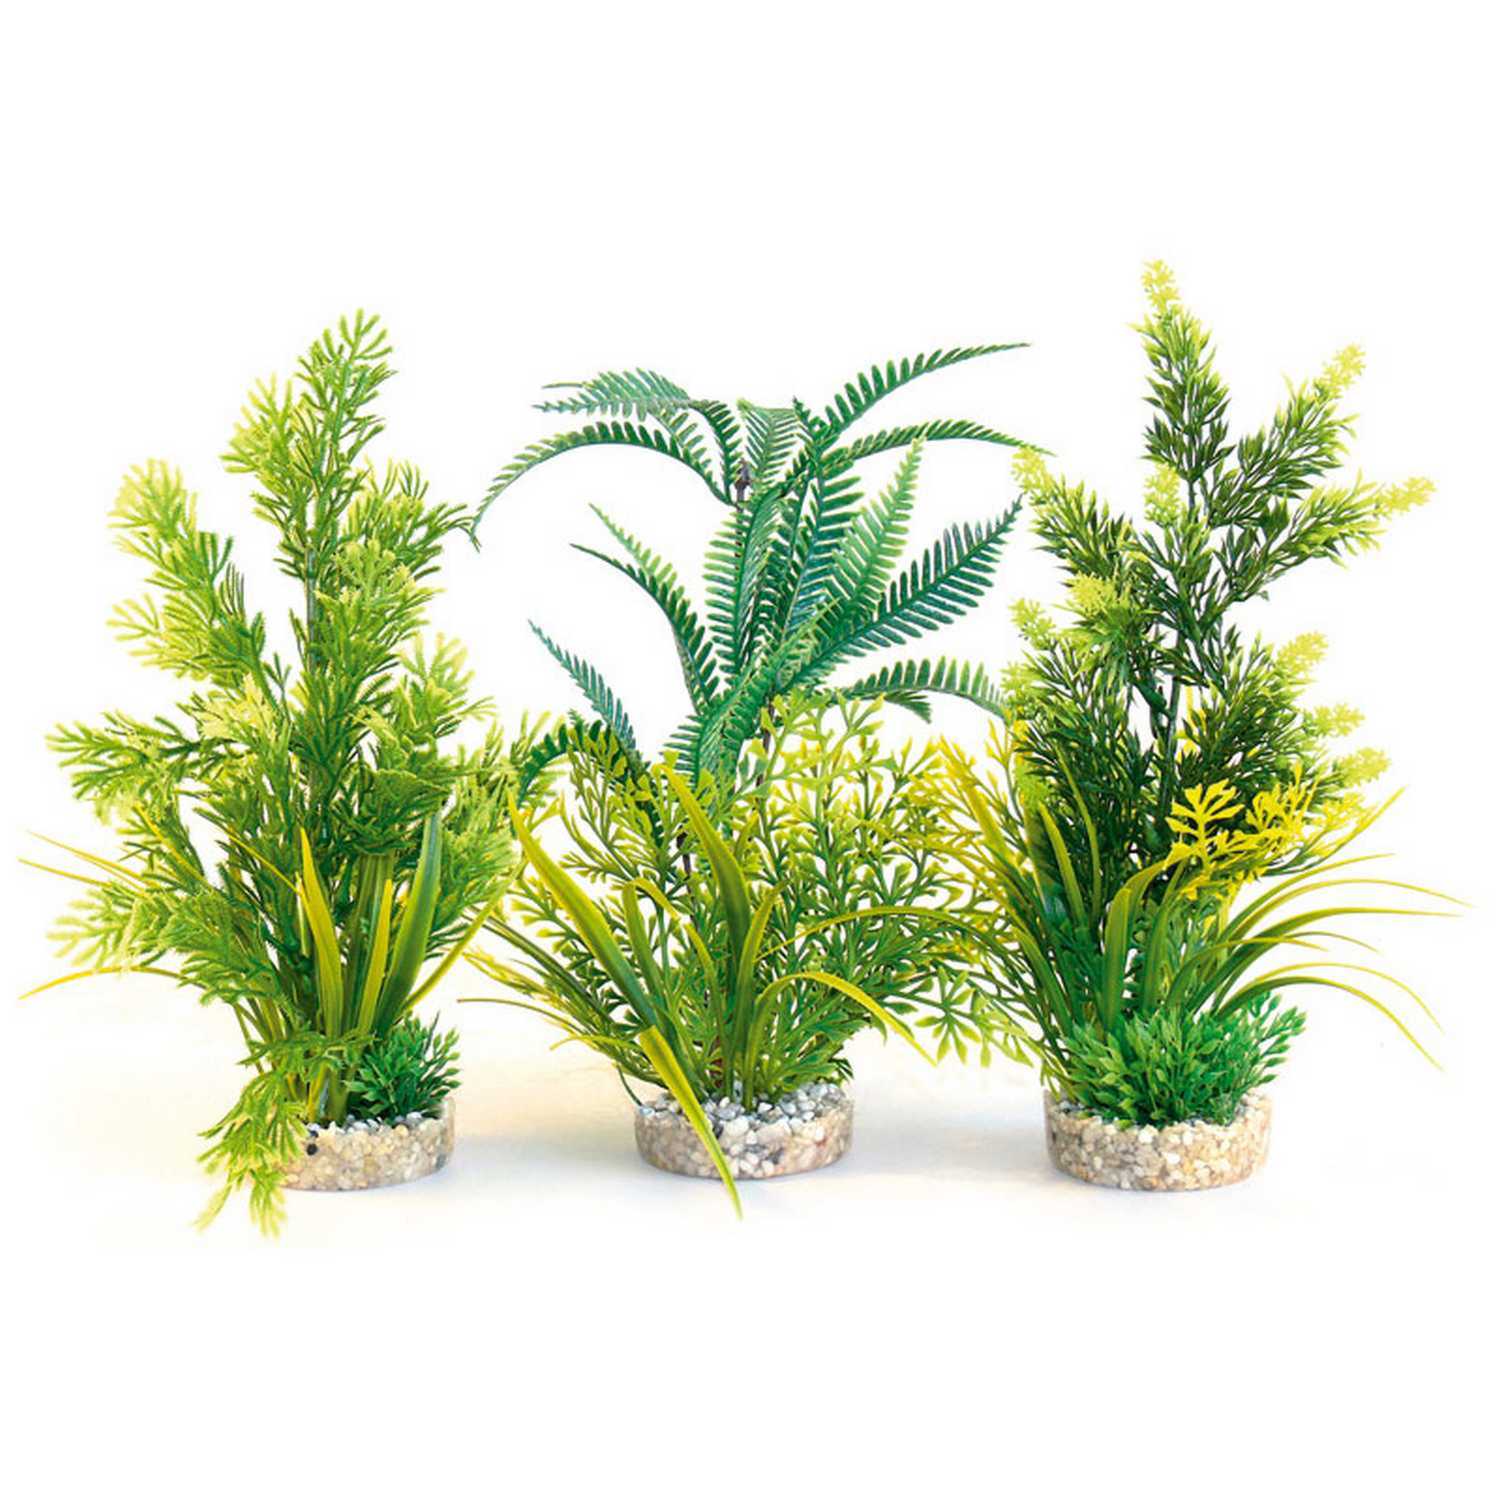 Sydeco Natural Aquaplant  - 21cm Image